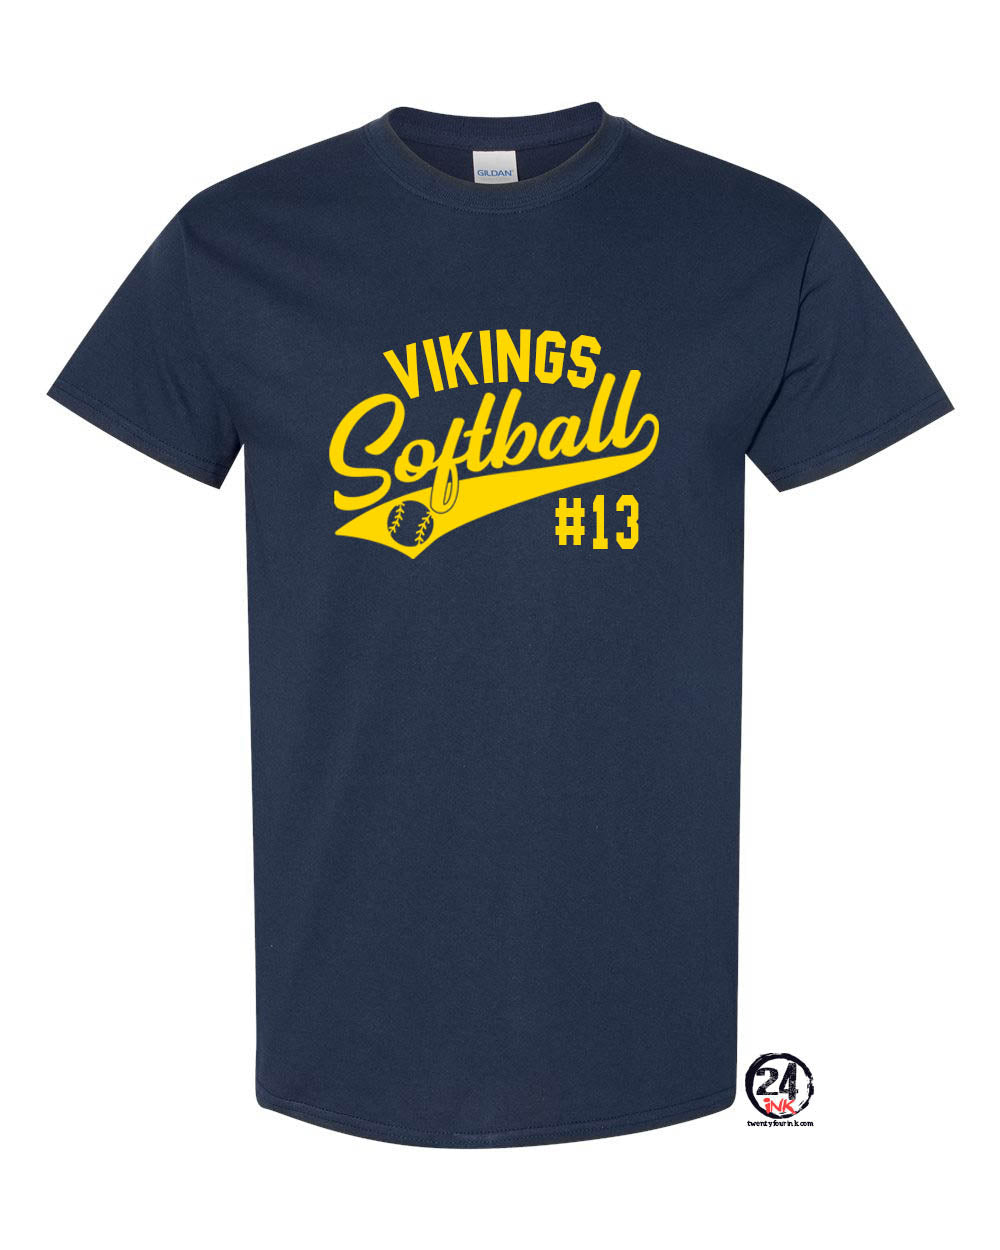 Vikings Softball t-Shirt